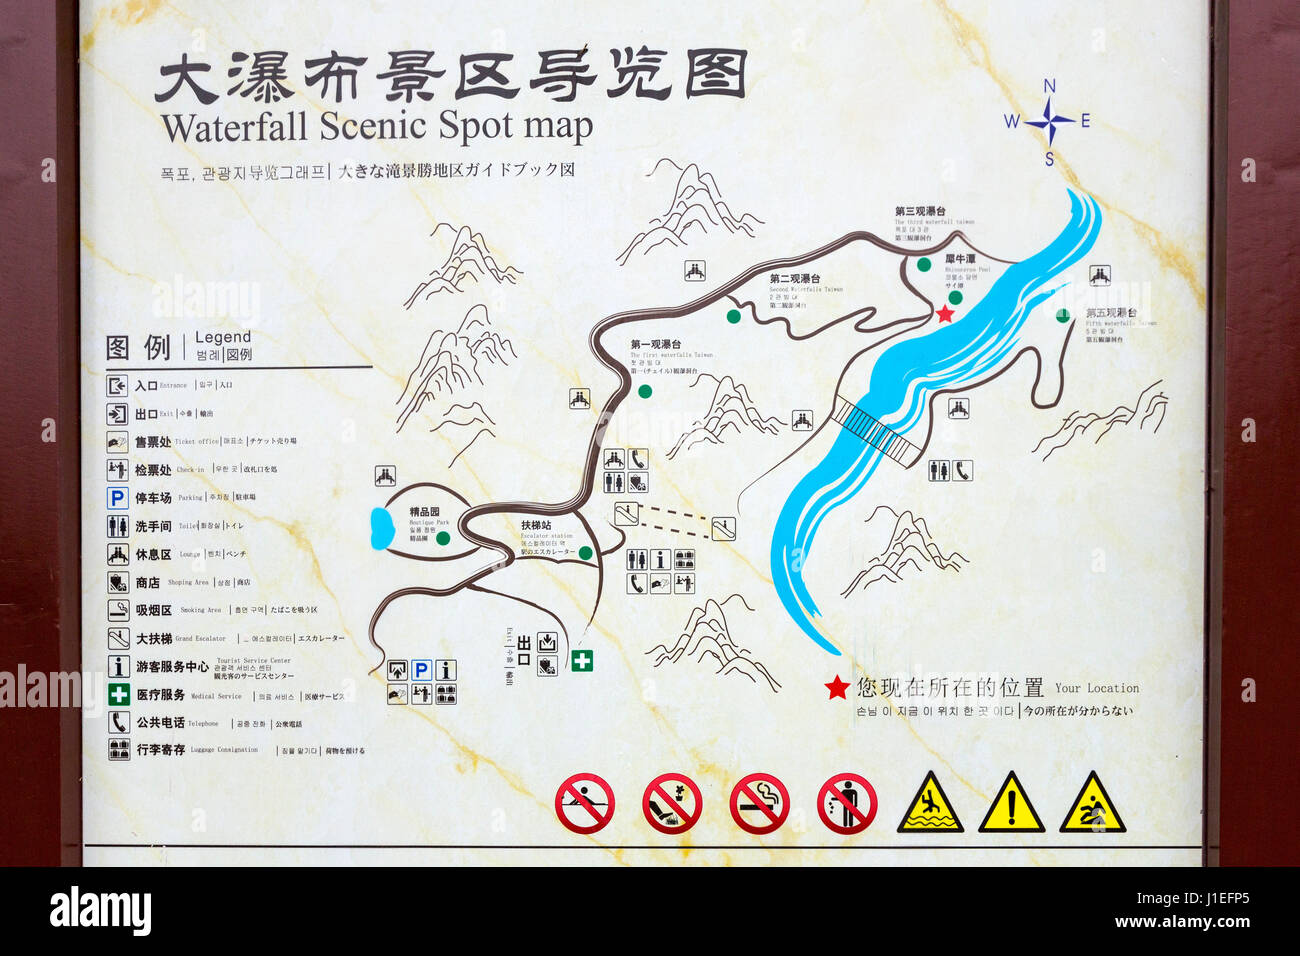 La provincia de Guizhou, China. Árboles Frutales, (amarillo) Cascada Huangguoshu espacio escénico. Mapa mostrando Virepoints escénica. Foto de stock